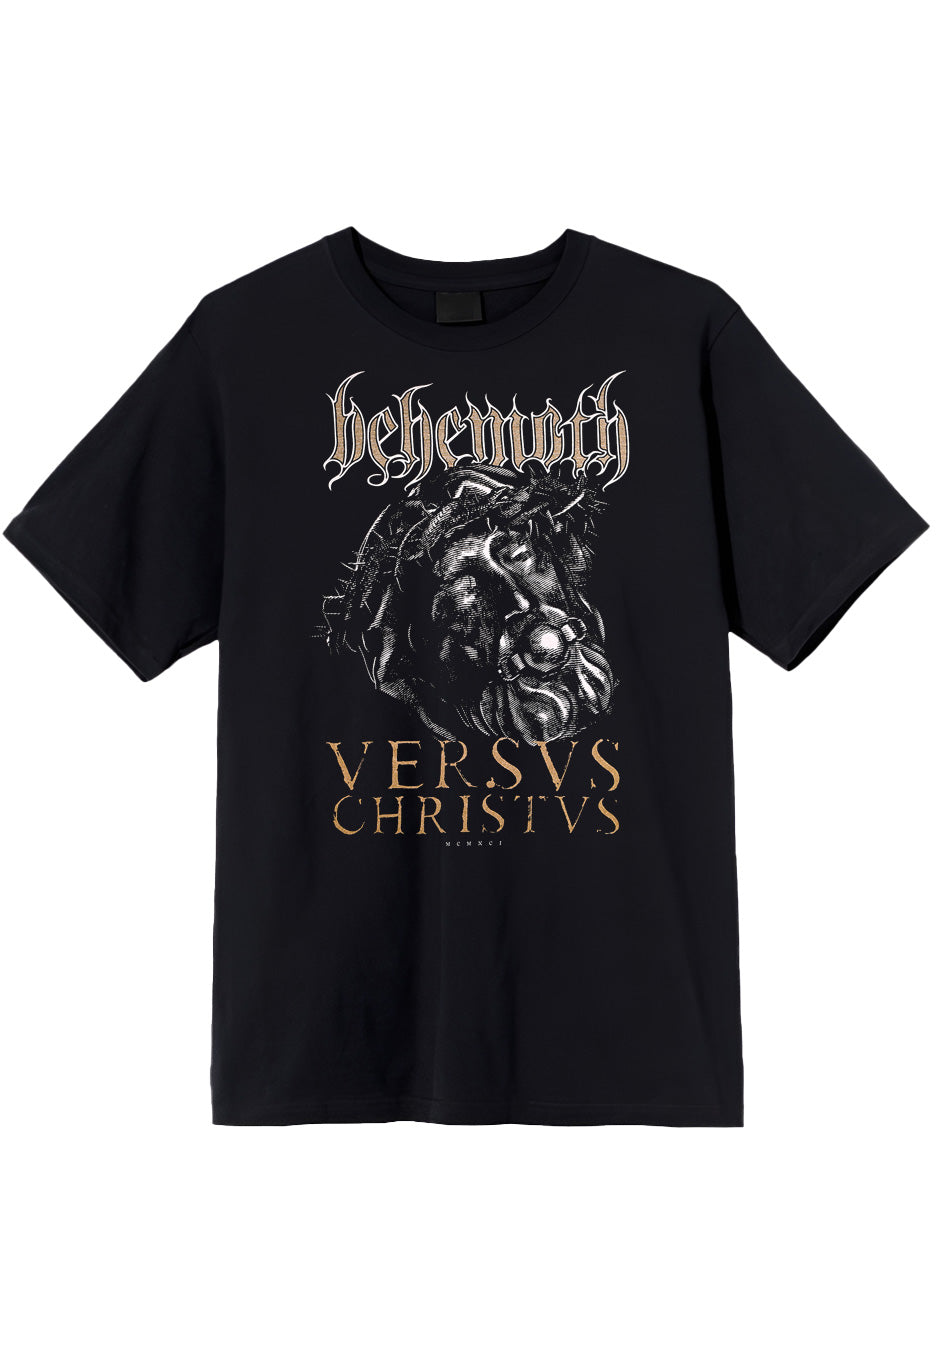 Behemoth - Versvs Christvs - T-Shirt